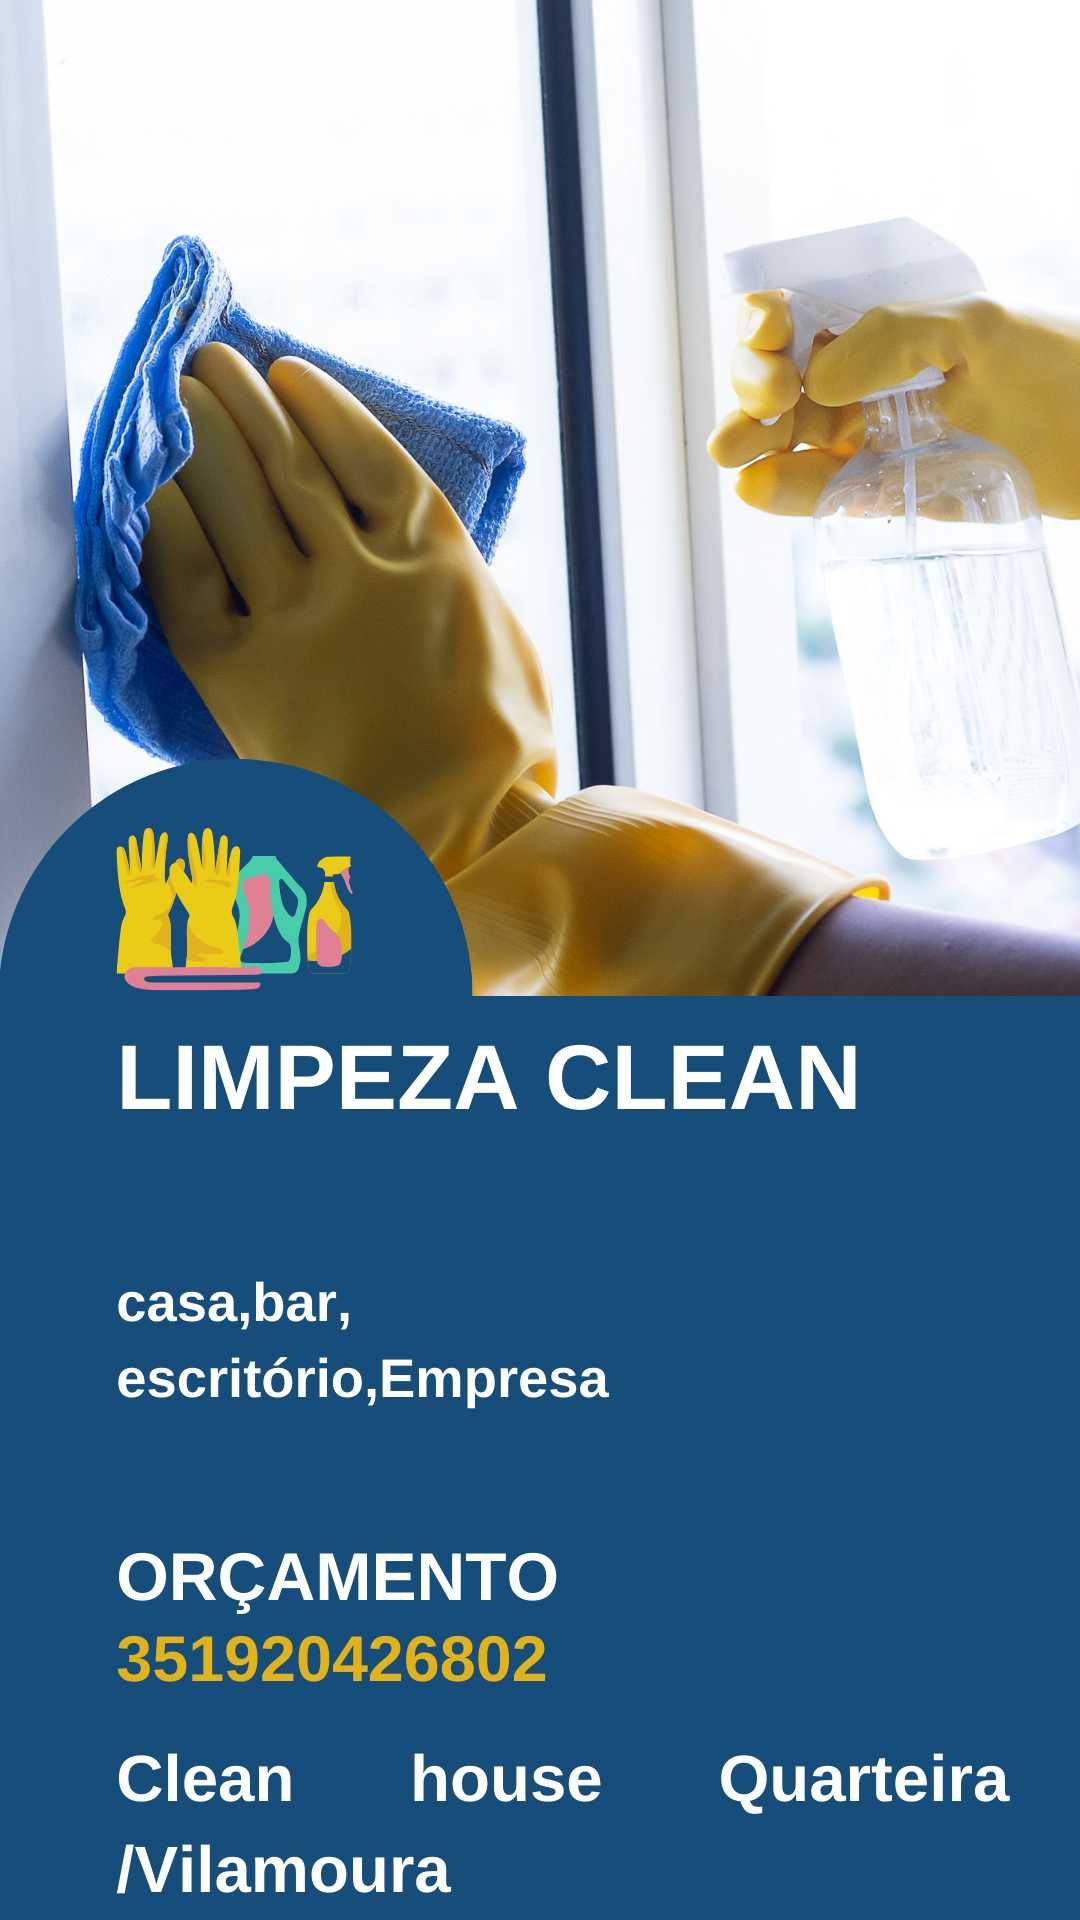 Limpeza Clean house